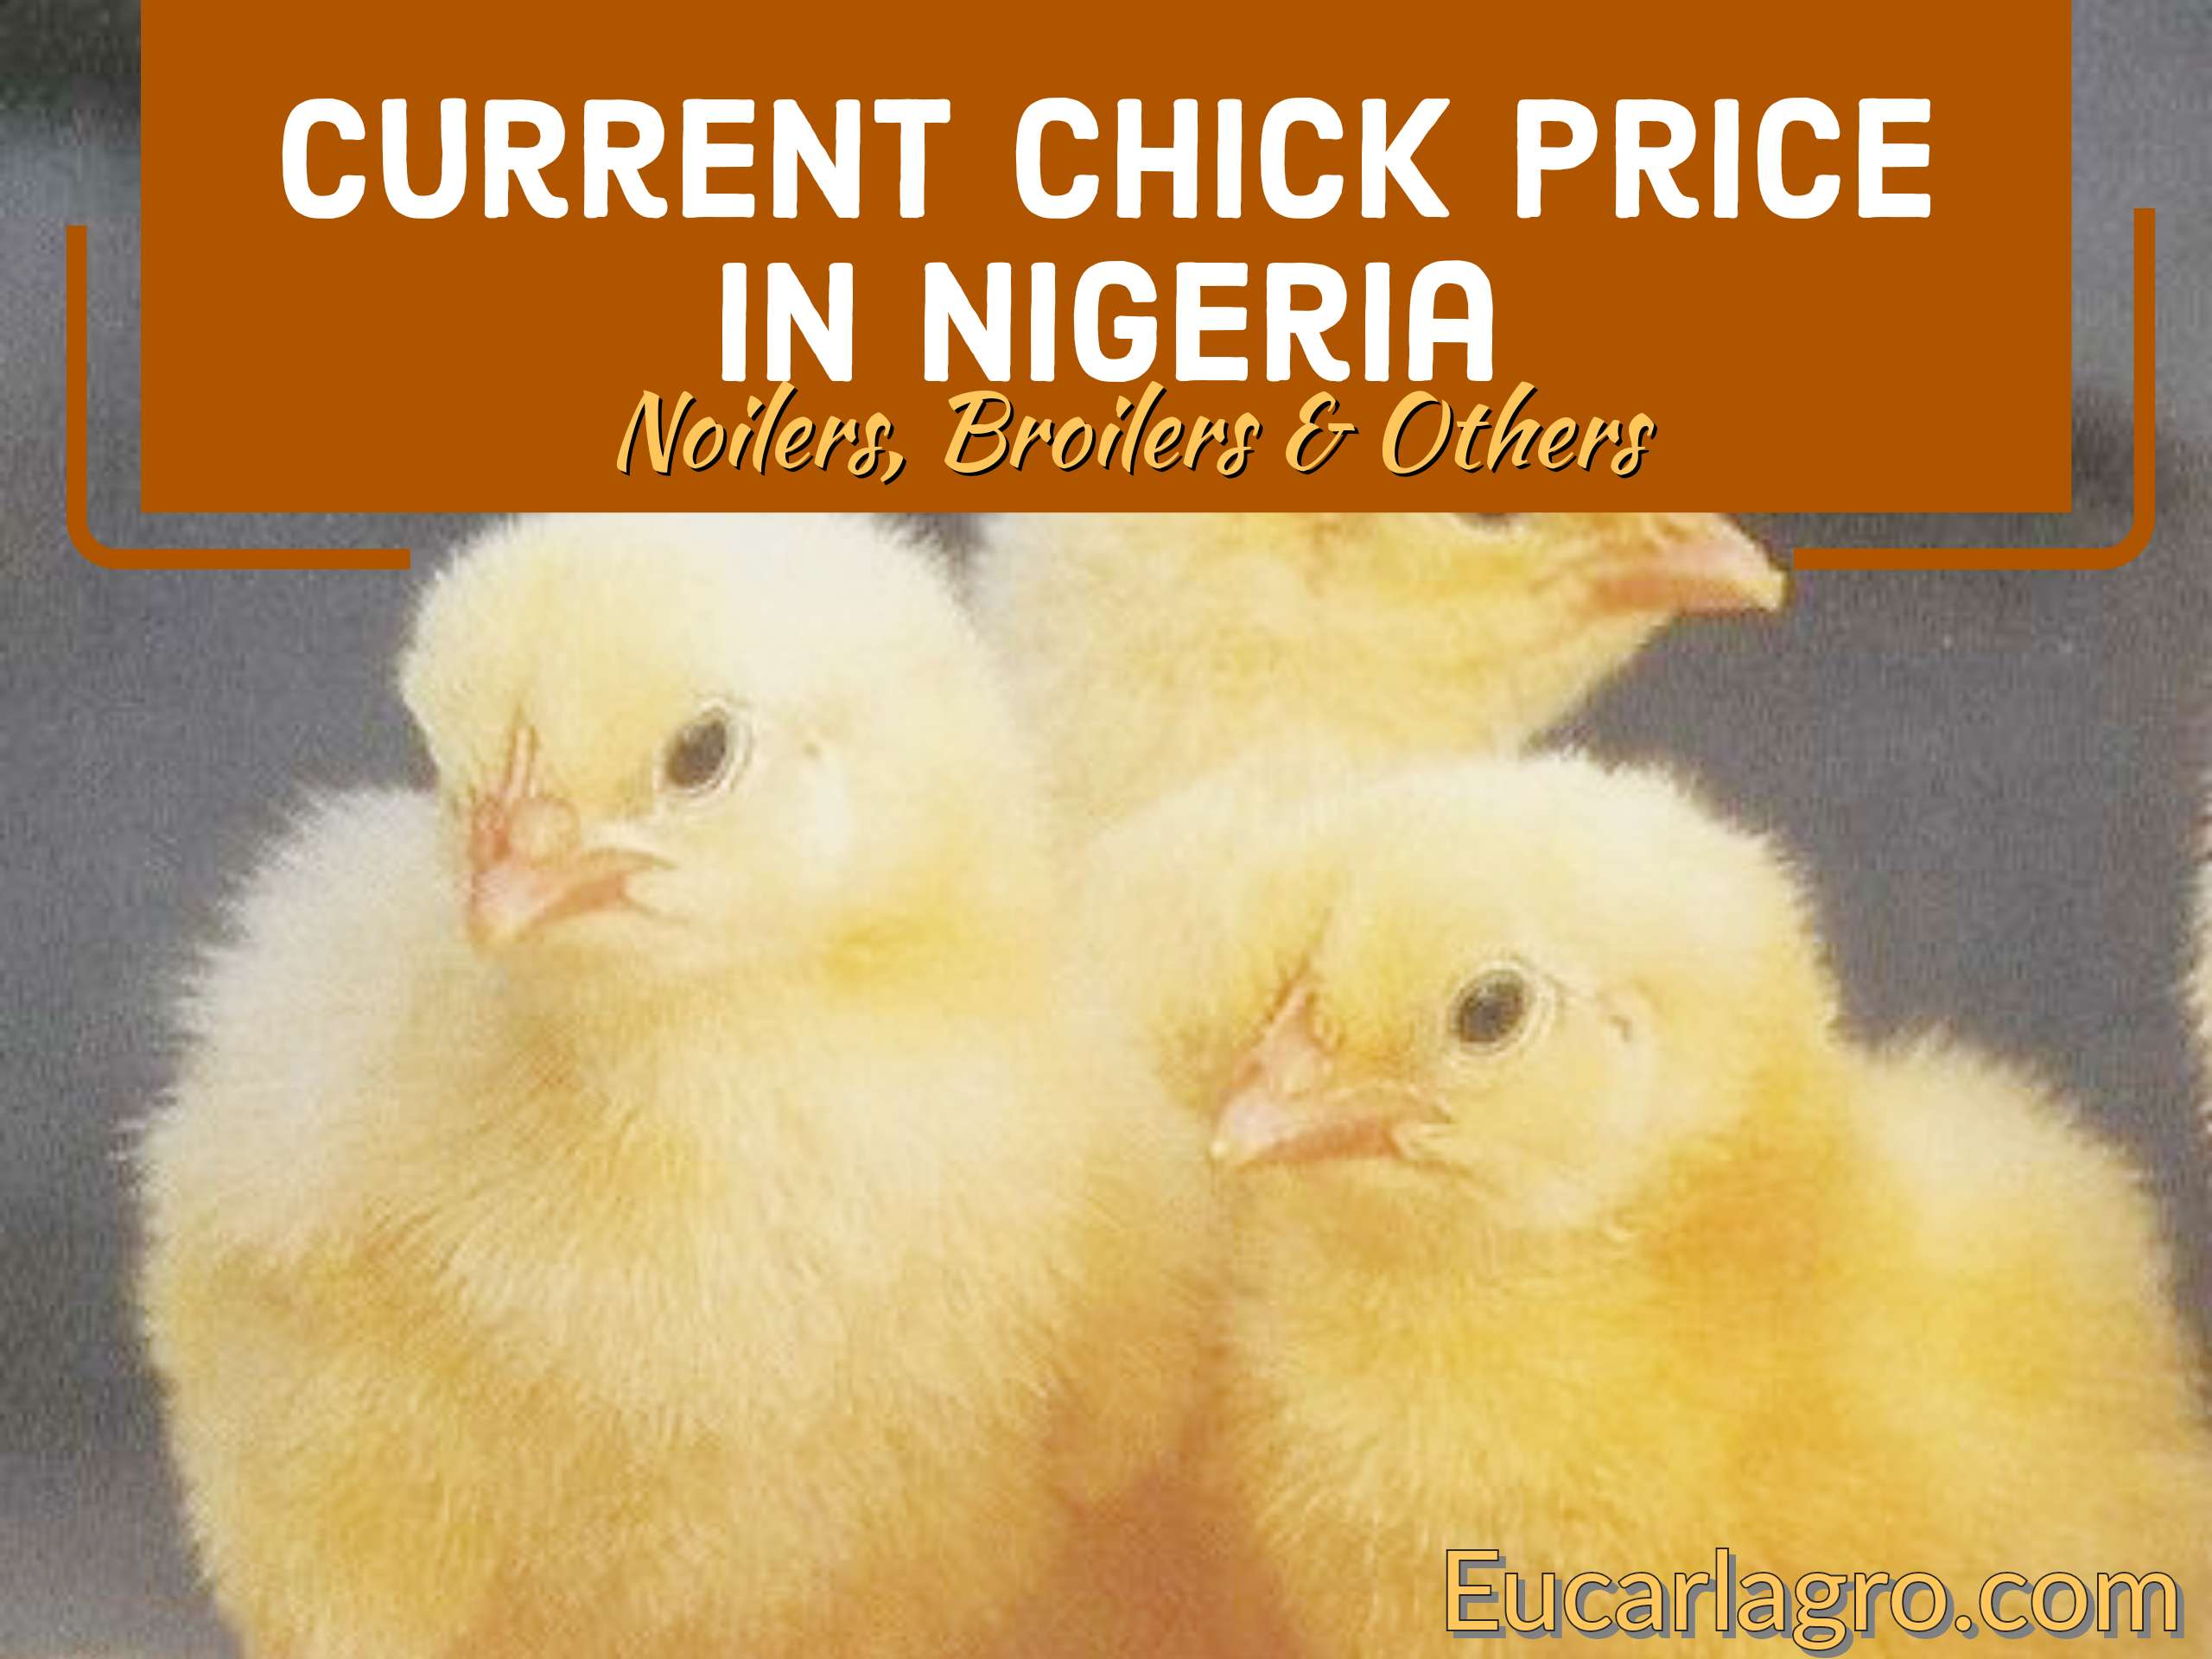 Current Chick Price in Nigeria